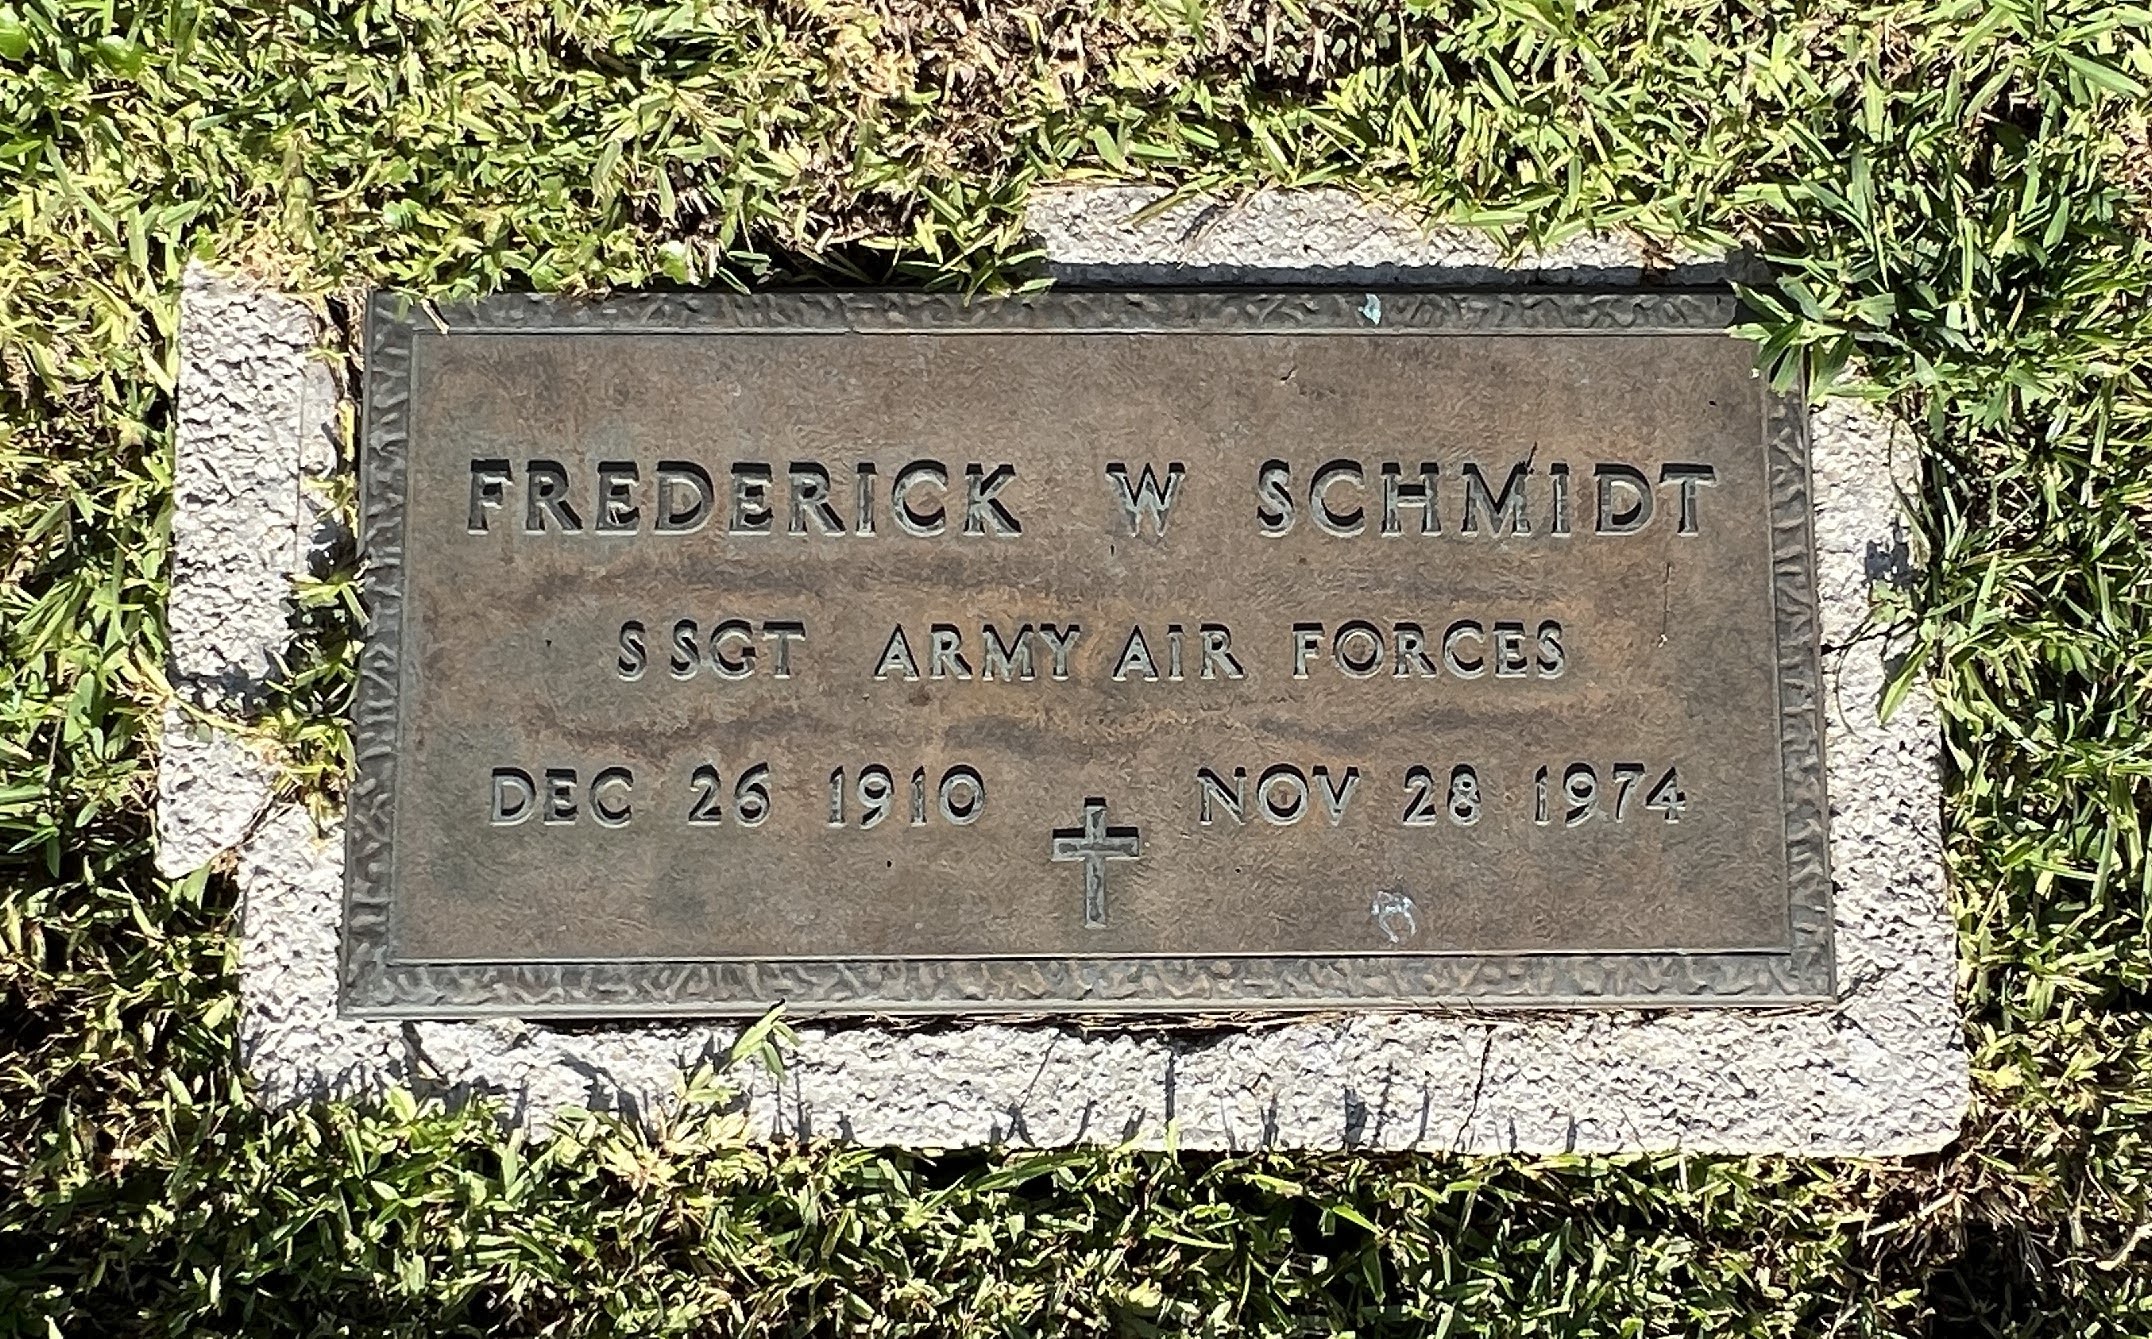 Sgt Frederick W Schmidt